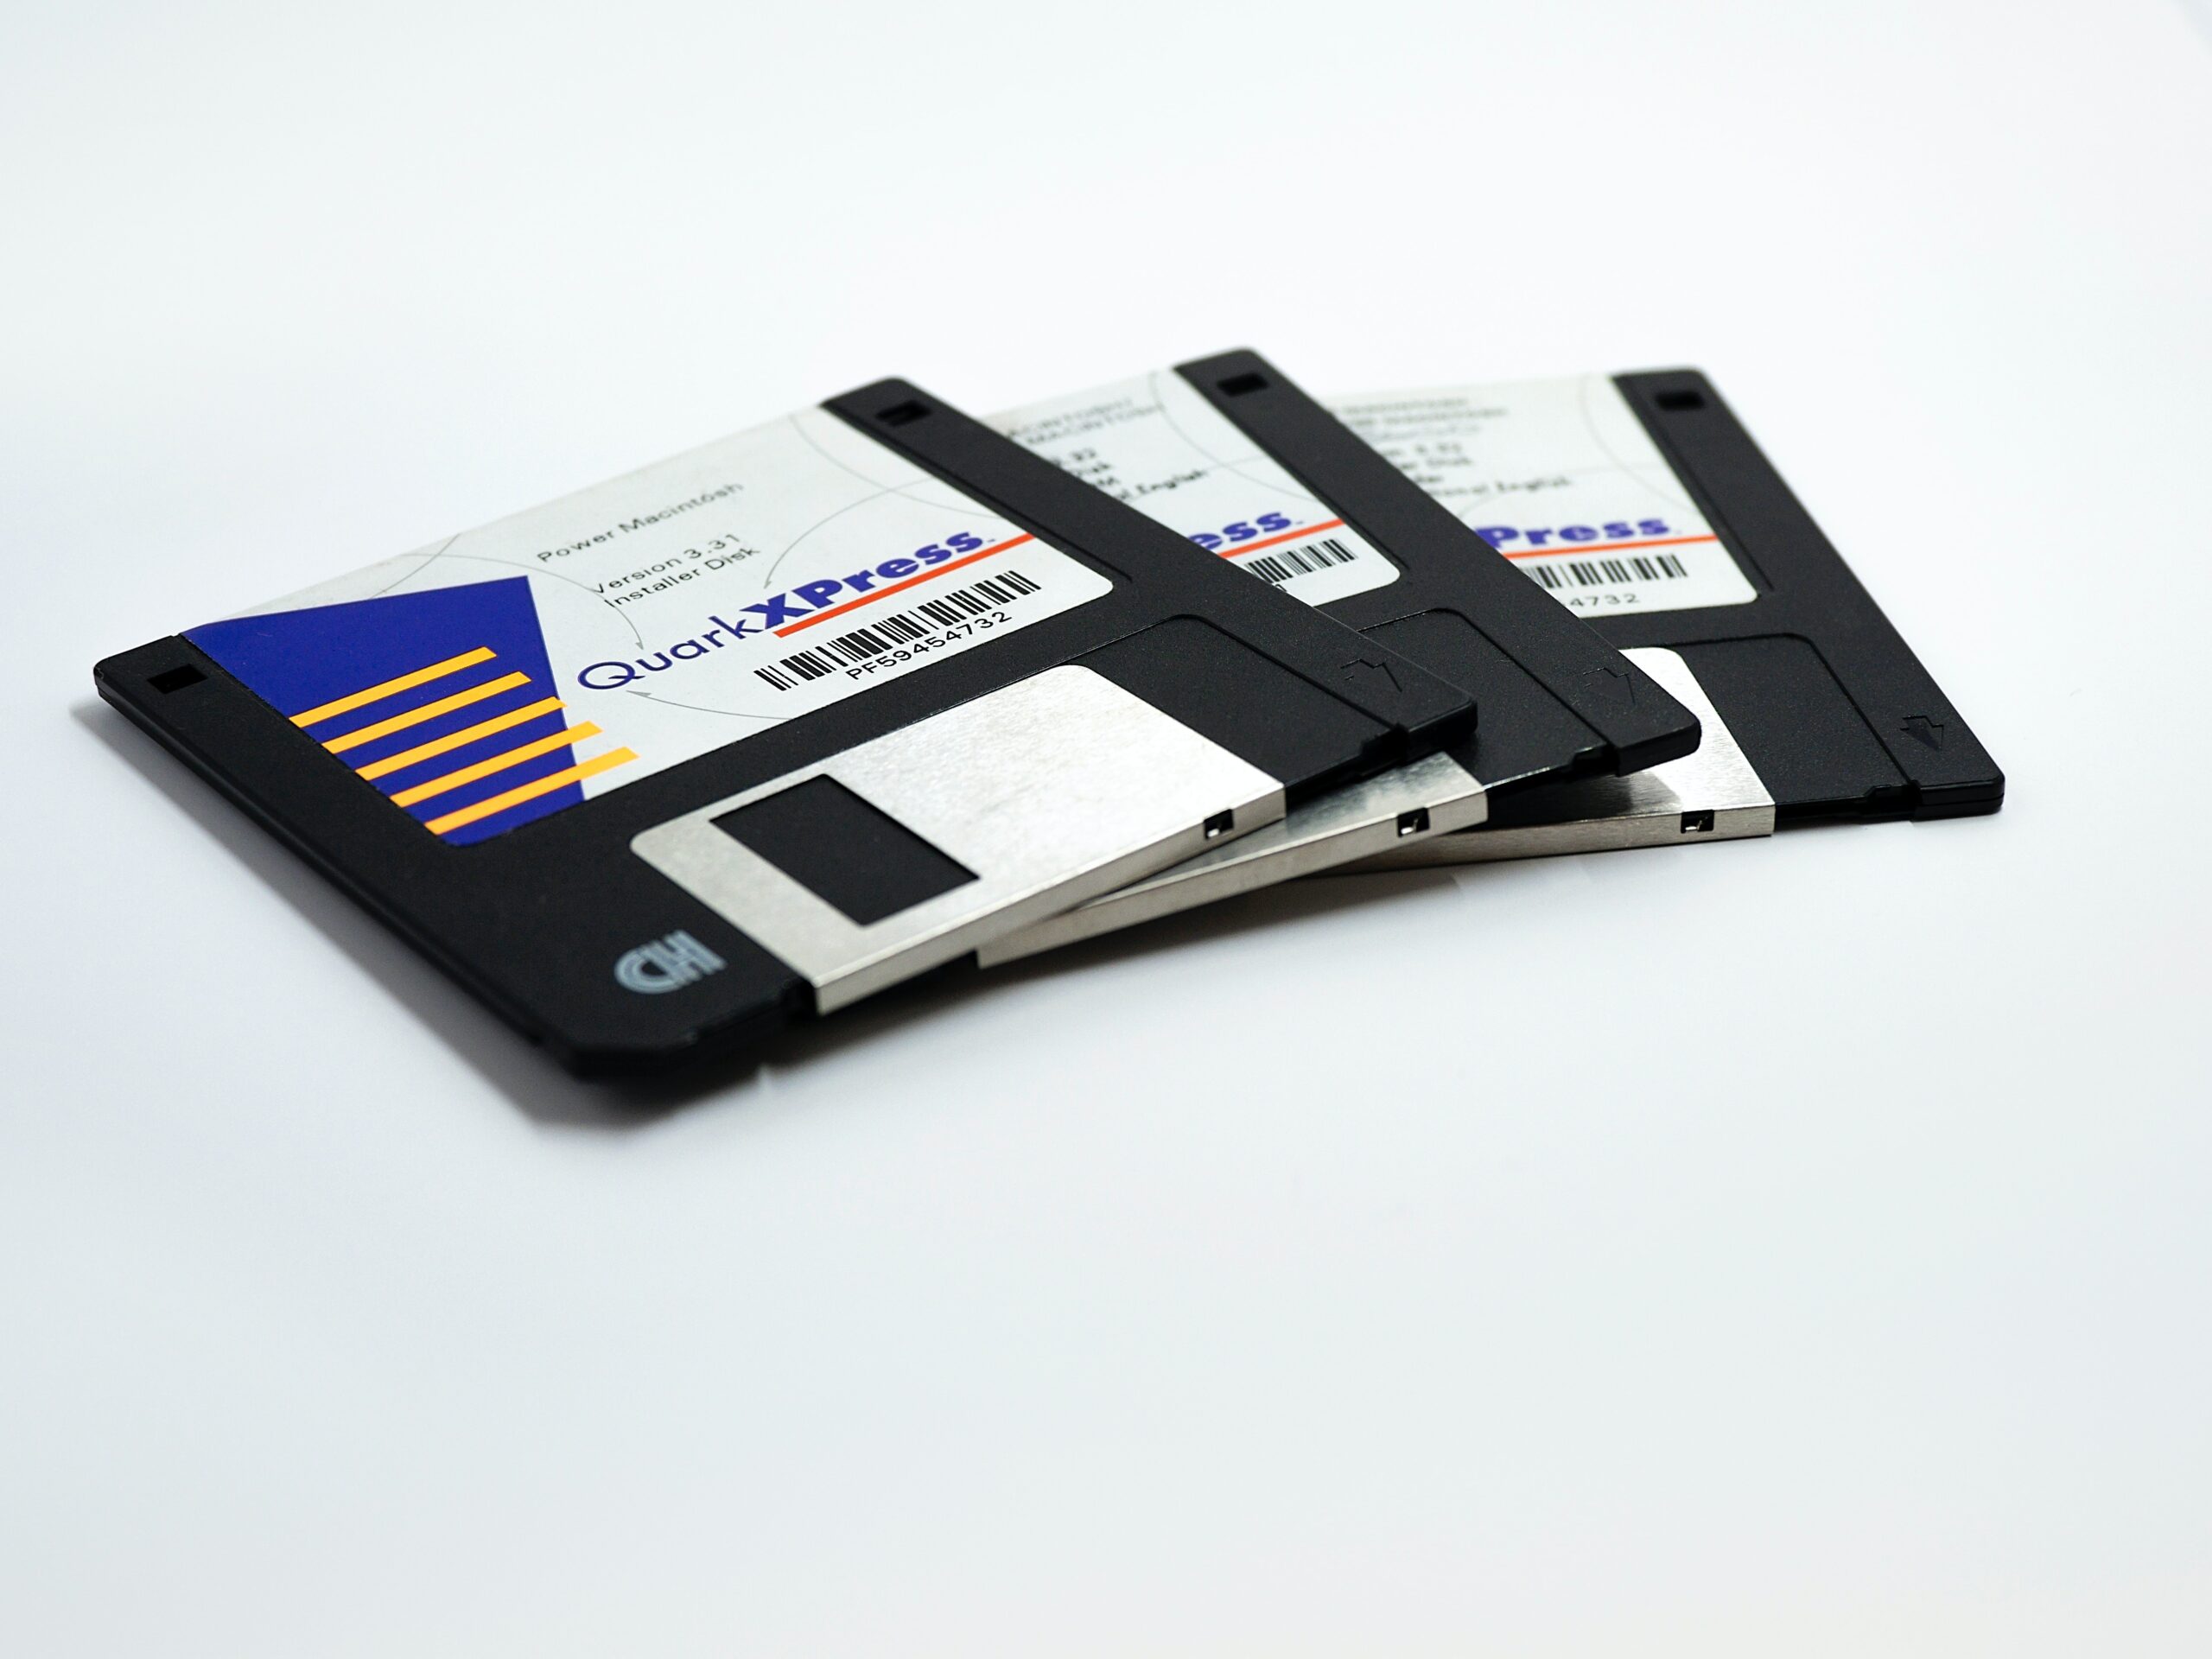 Floppy discs to represent data in the Oracle Cloud Autonomous Database